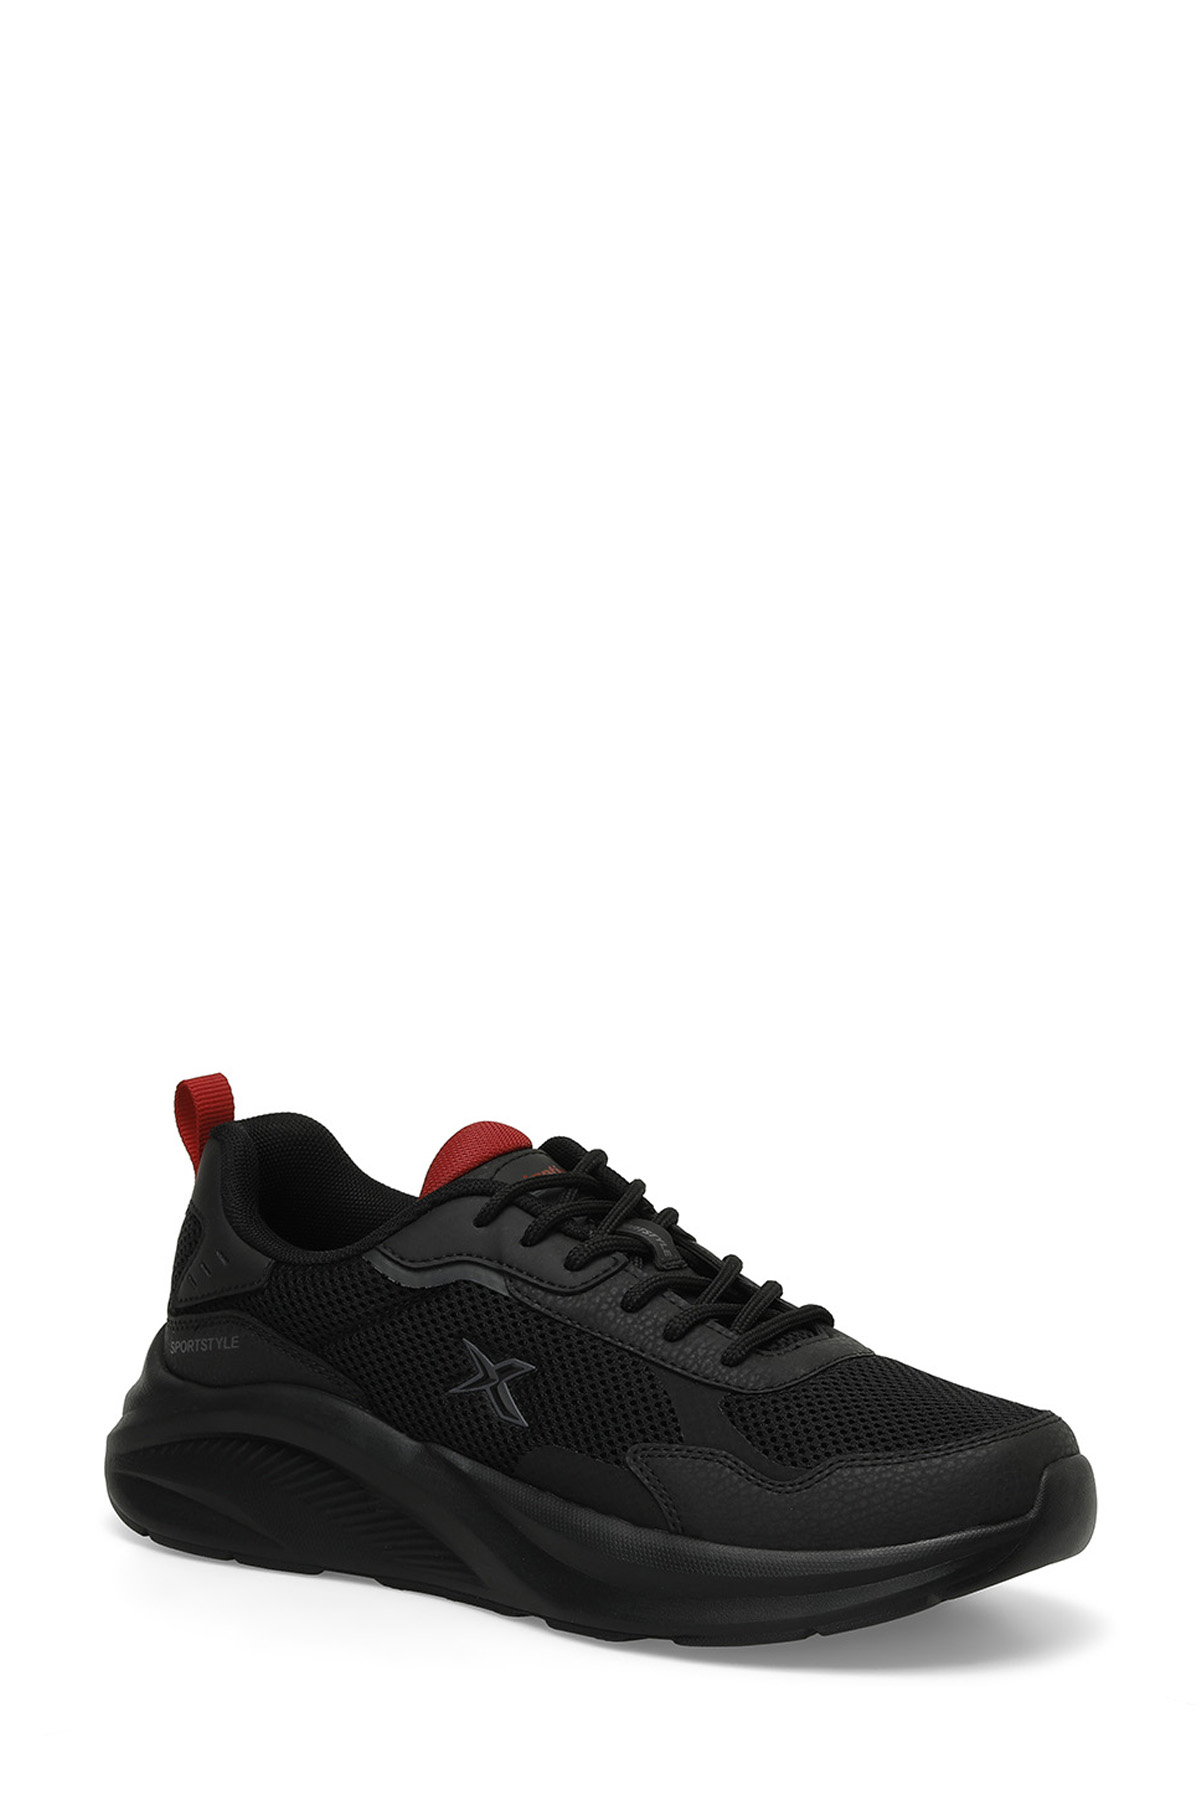 KINETIX THARES TX 4FX BLACK Man Sneaker